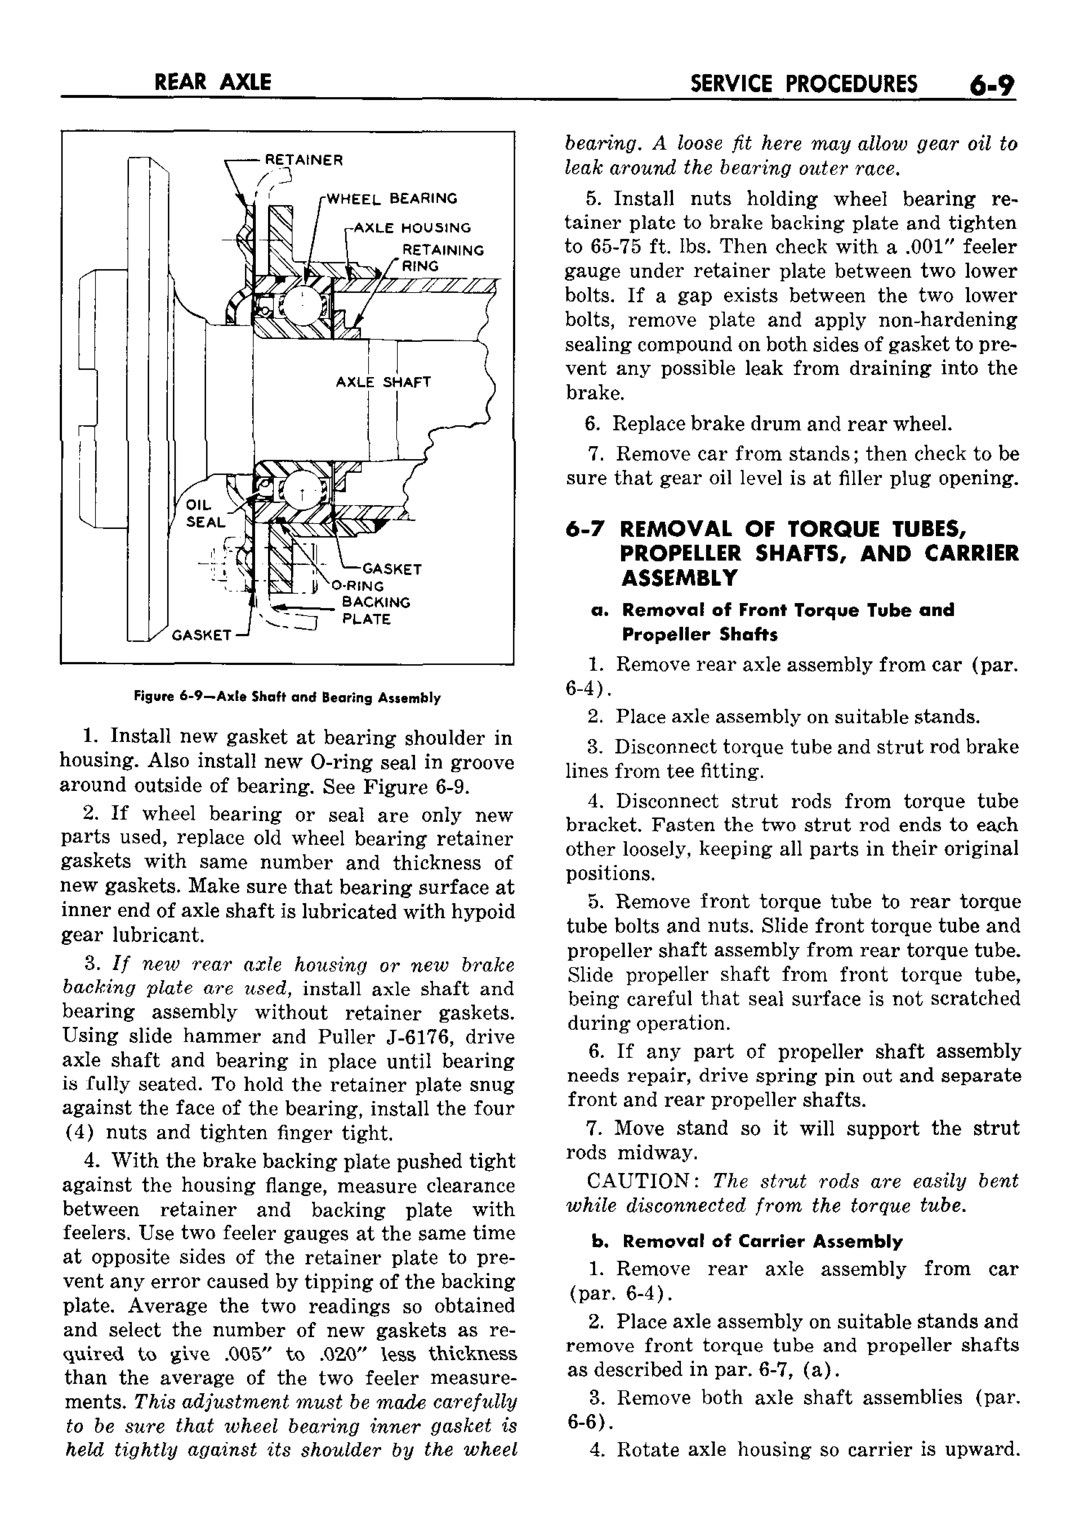 n_07 1959 Buick Shop Manual - Rear Axle-009-009.jpg